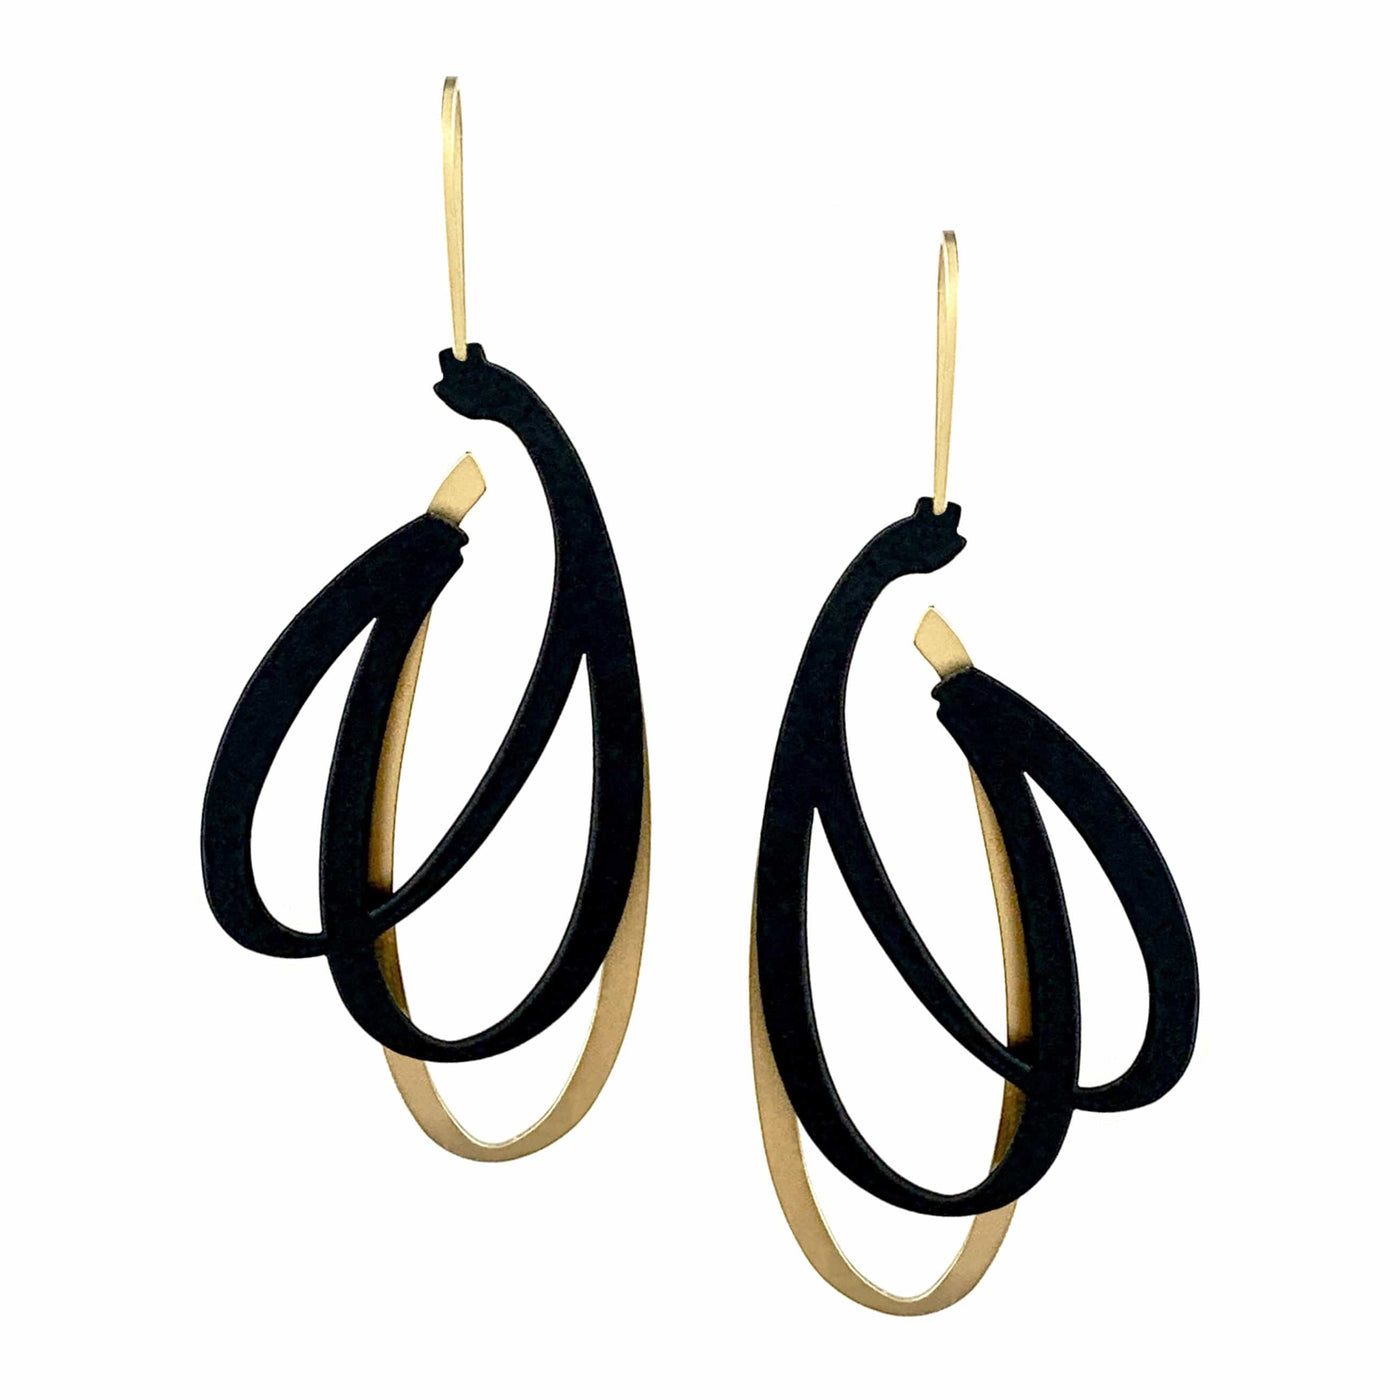 X2 Spurt Earrings - Raw/ Gold - inSync design